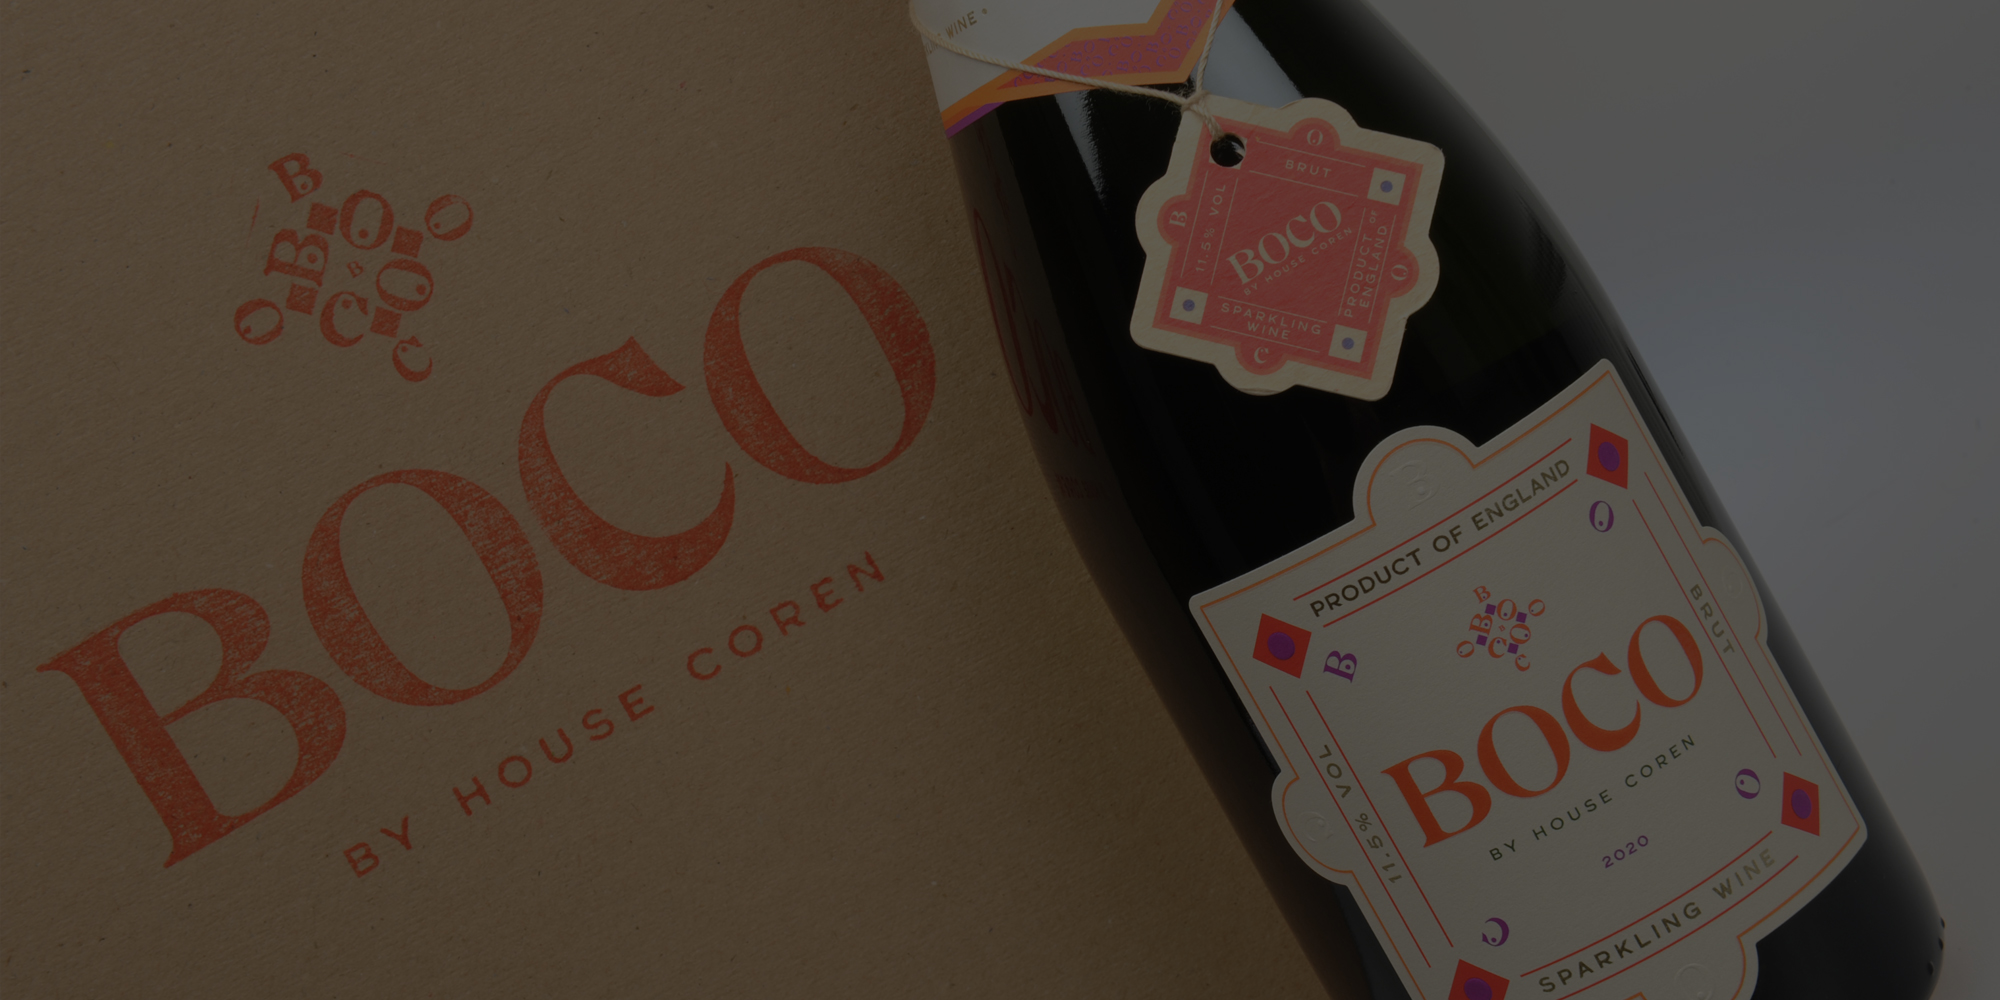 House Coren Boco Brut sparkling wine, vineyard, West Sussex. Producers of Boco sparkling wine.